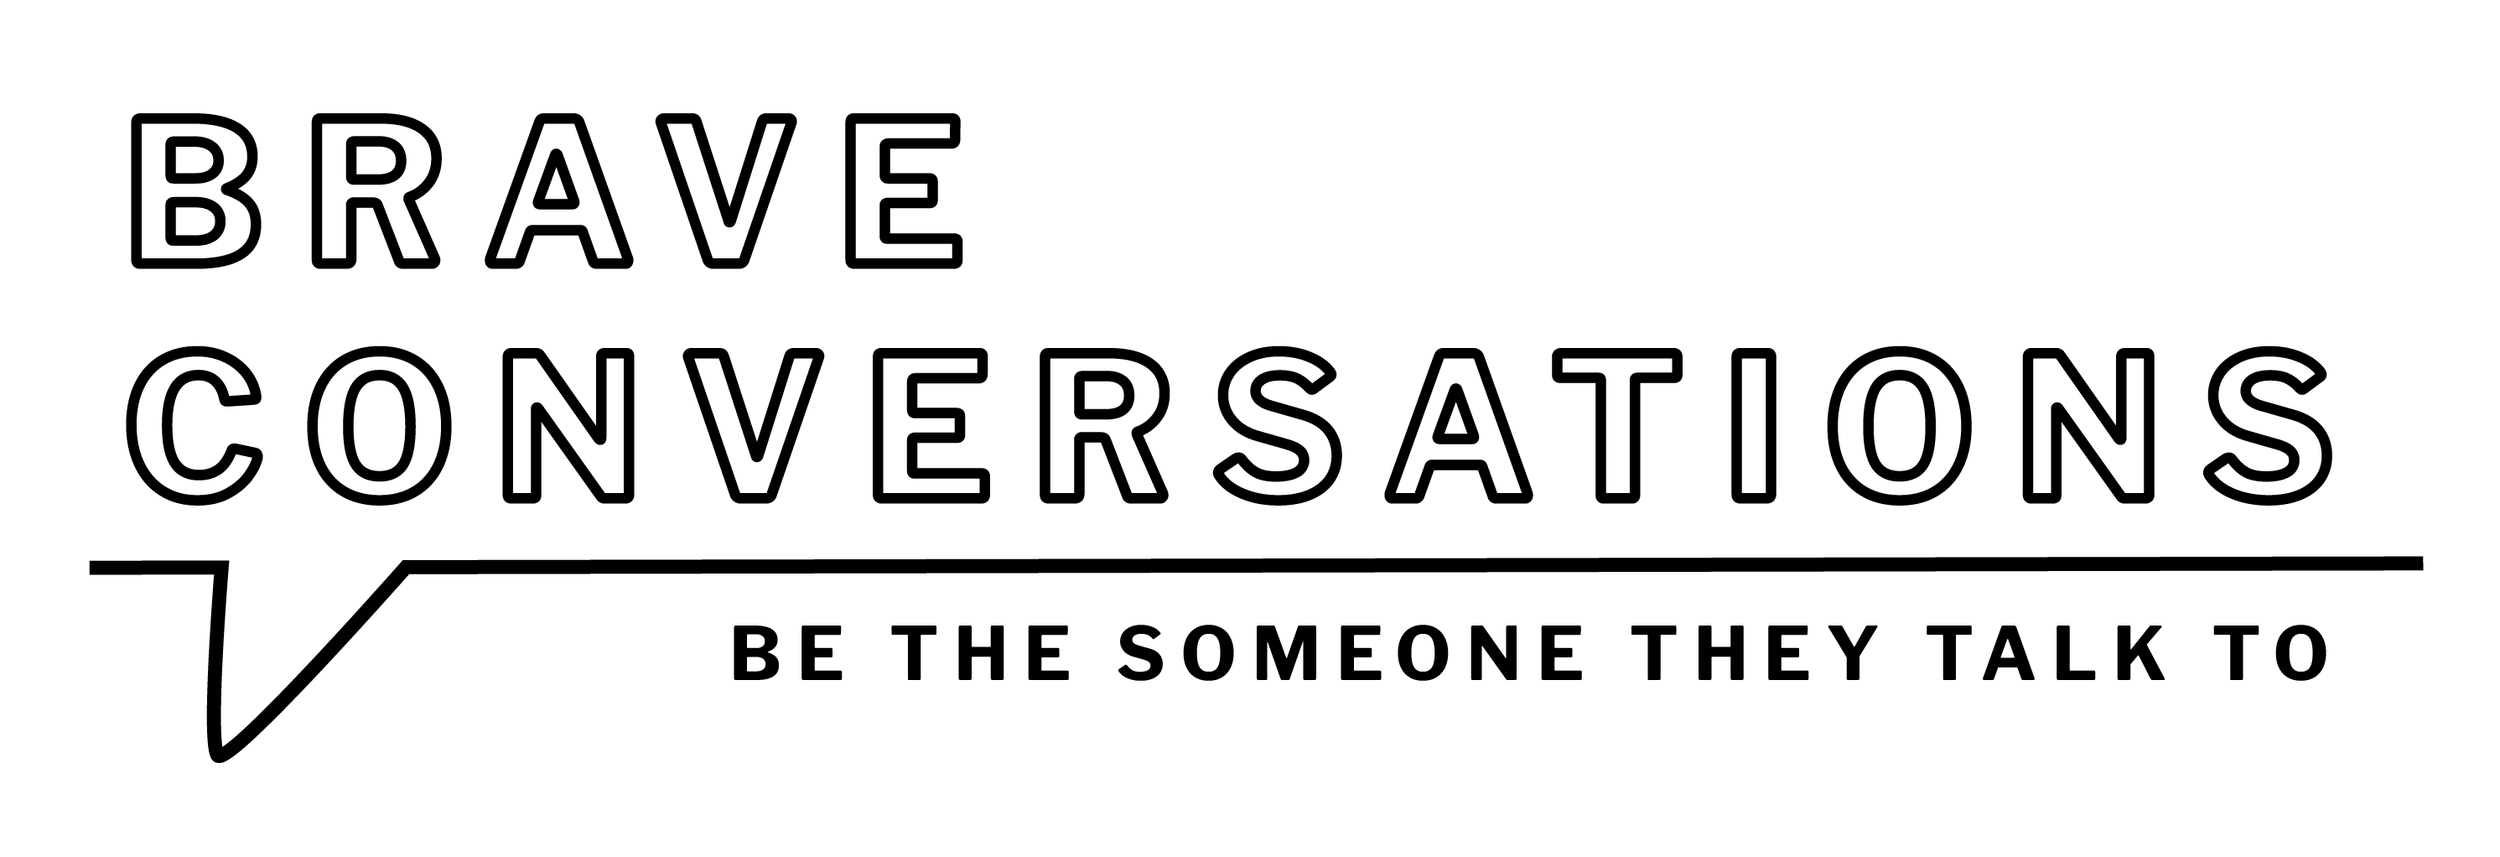 Brave-Conversation-Logo-w-tagline-01-1.png